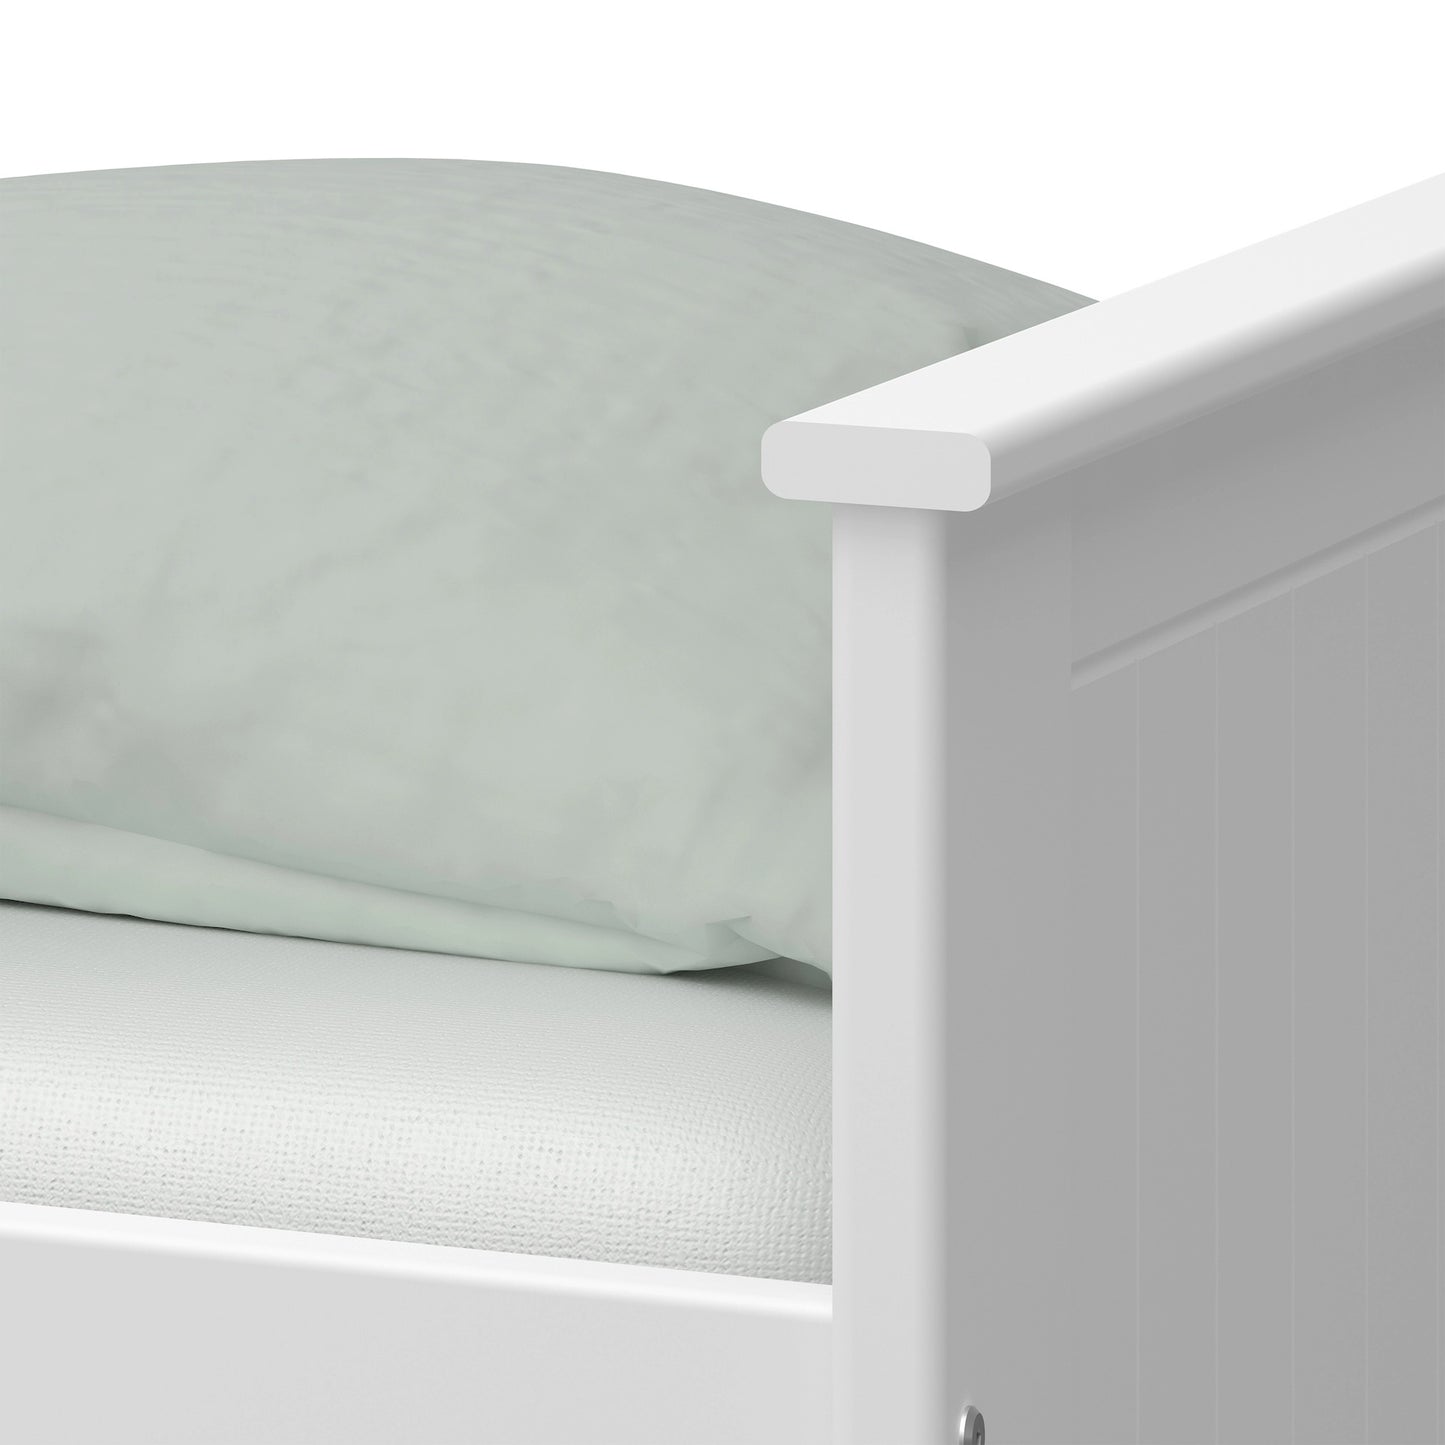 Furniture To Go Alba Bunk Bed White